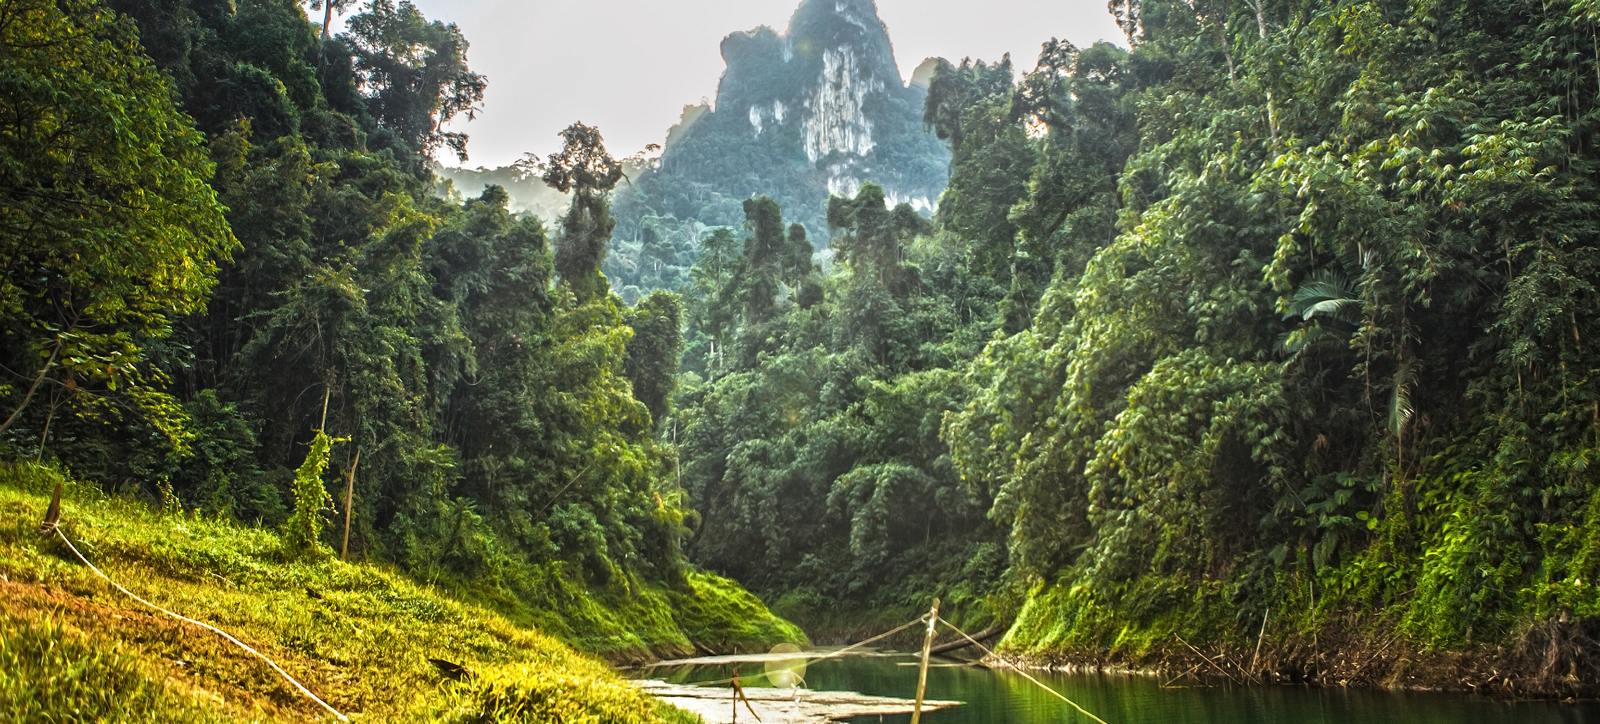 A view of a river running through a rainforest in Thailand.